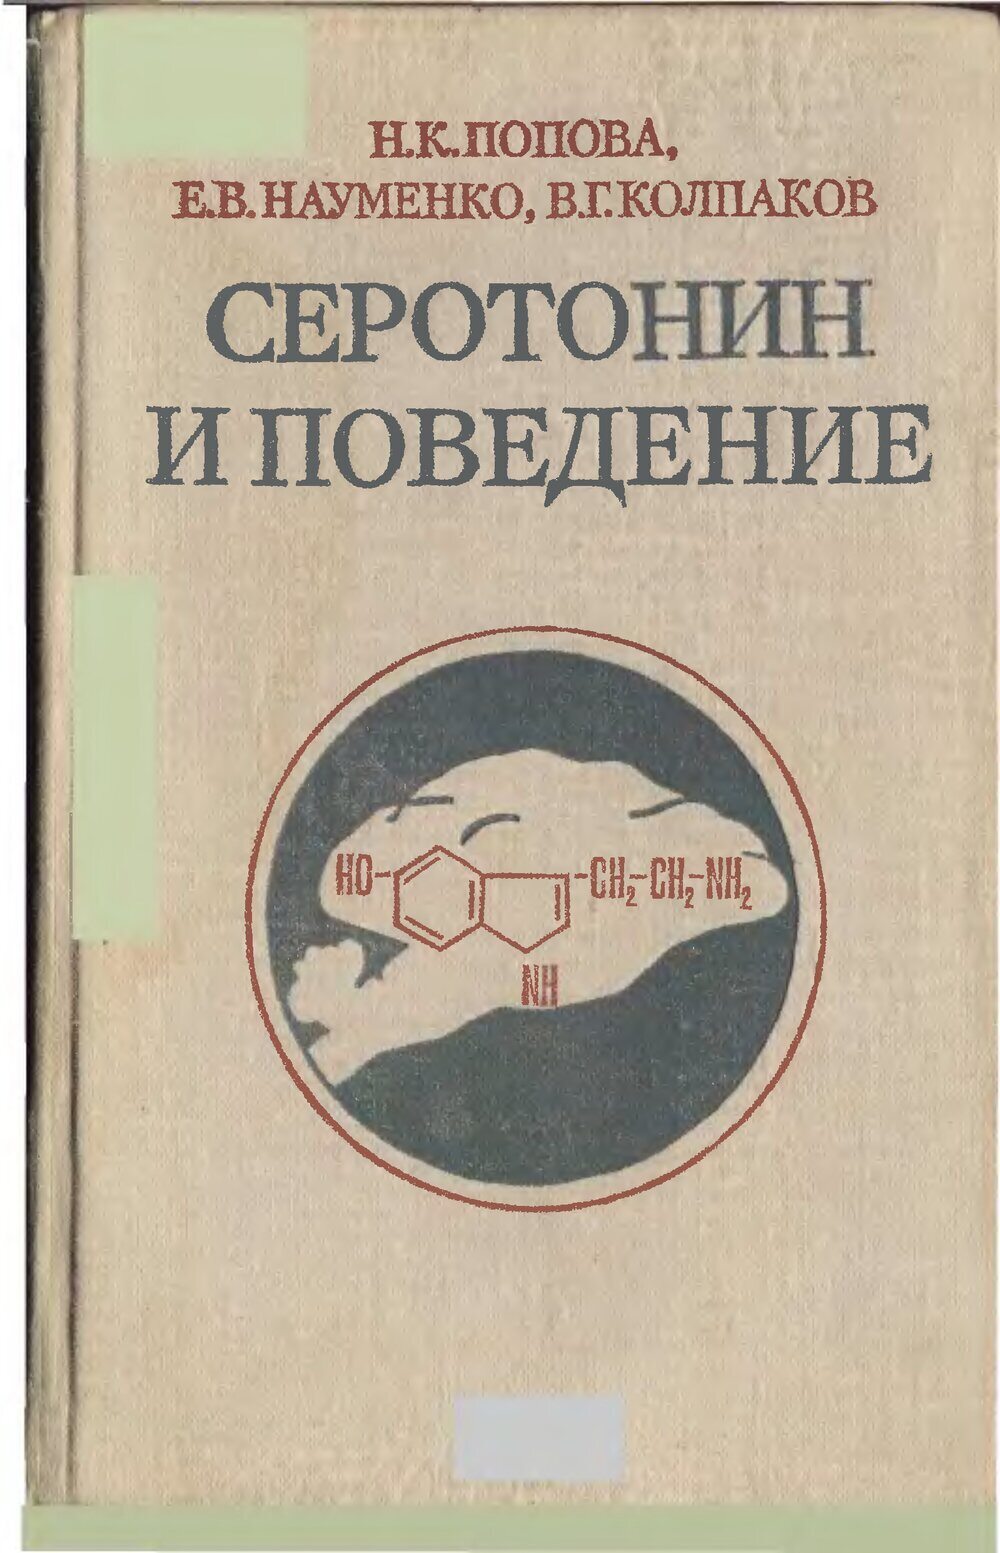 Обложка книги "Серотонин и поведение"